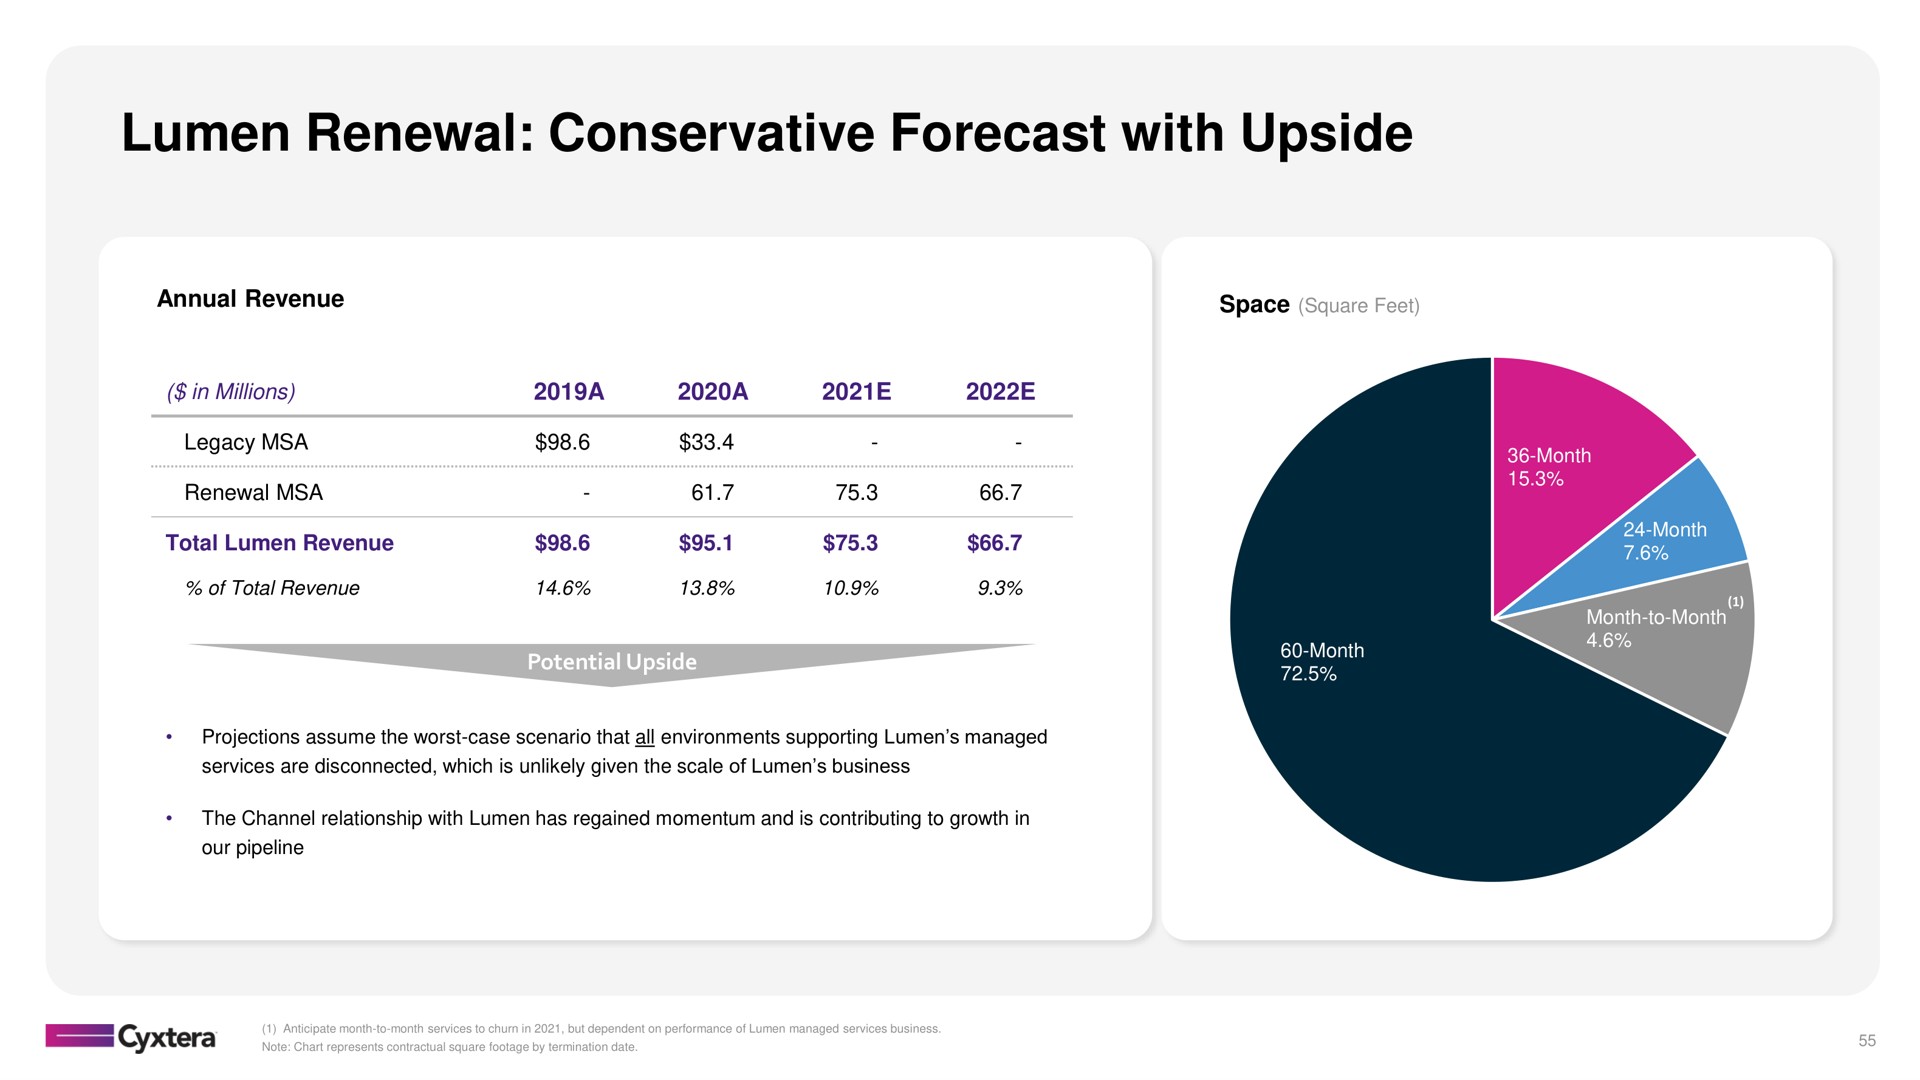 lumen renewal conservative forecast with upside | Cyxtera